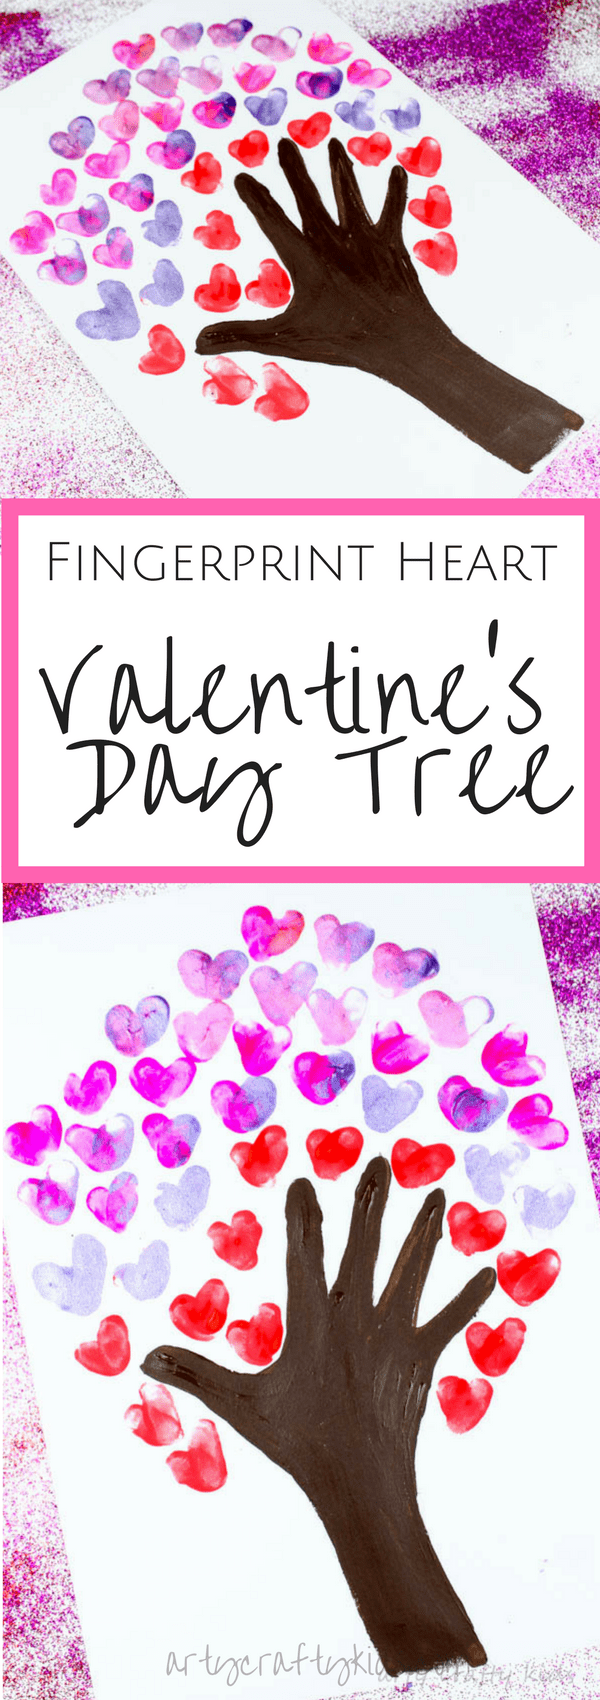 Fingerprint Heart Valentines Day Tree -   21 valentines crafts for kids
 ideas